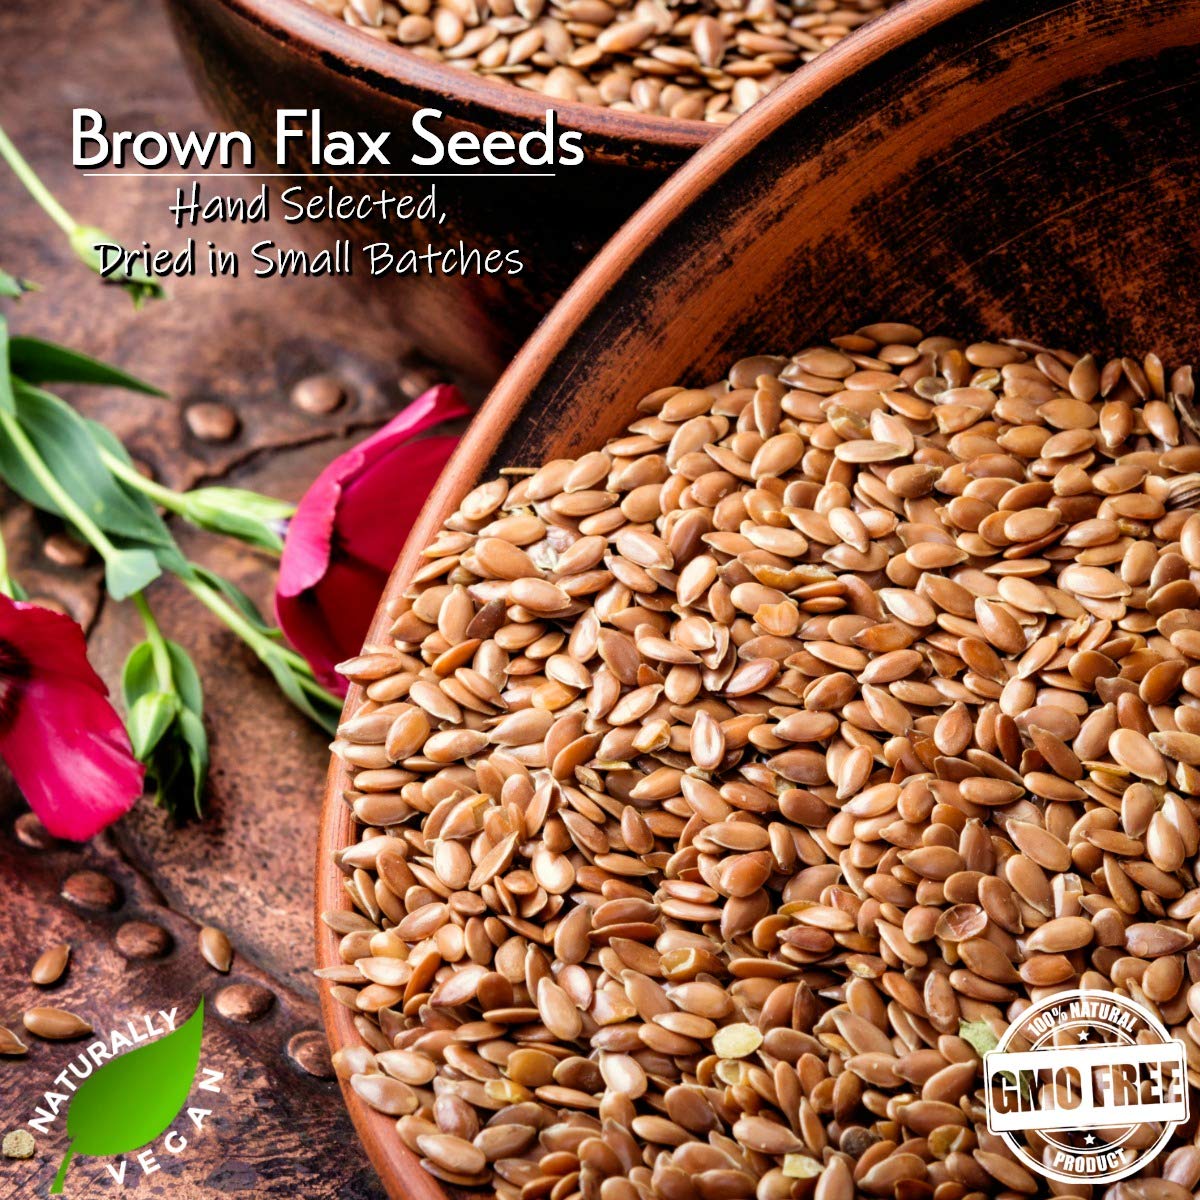 GERBS Raw Brown Flax Seeds, 14 ounce Bag, Top 14 Food Allergen Free, Non GMO, Vegan, Keto, Paleo Friendly